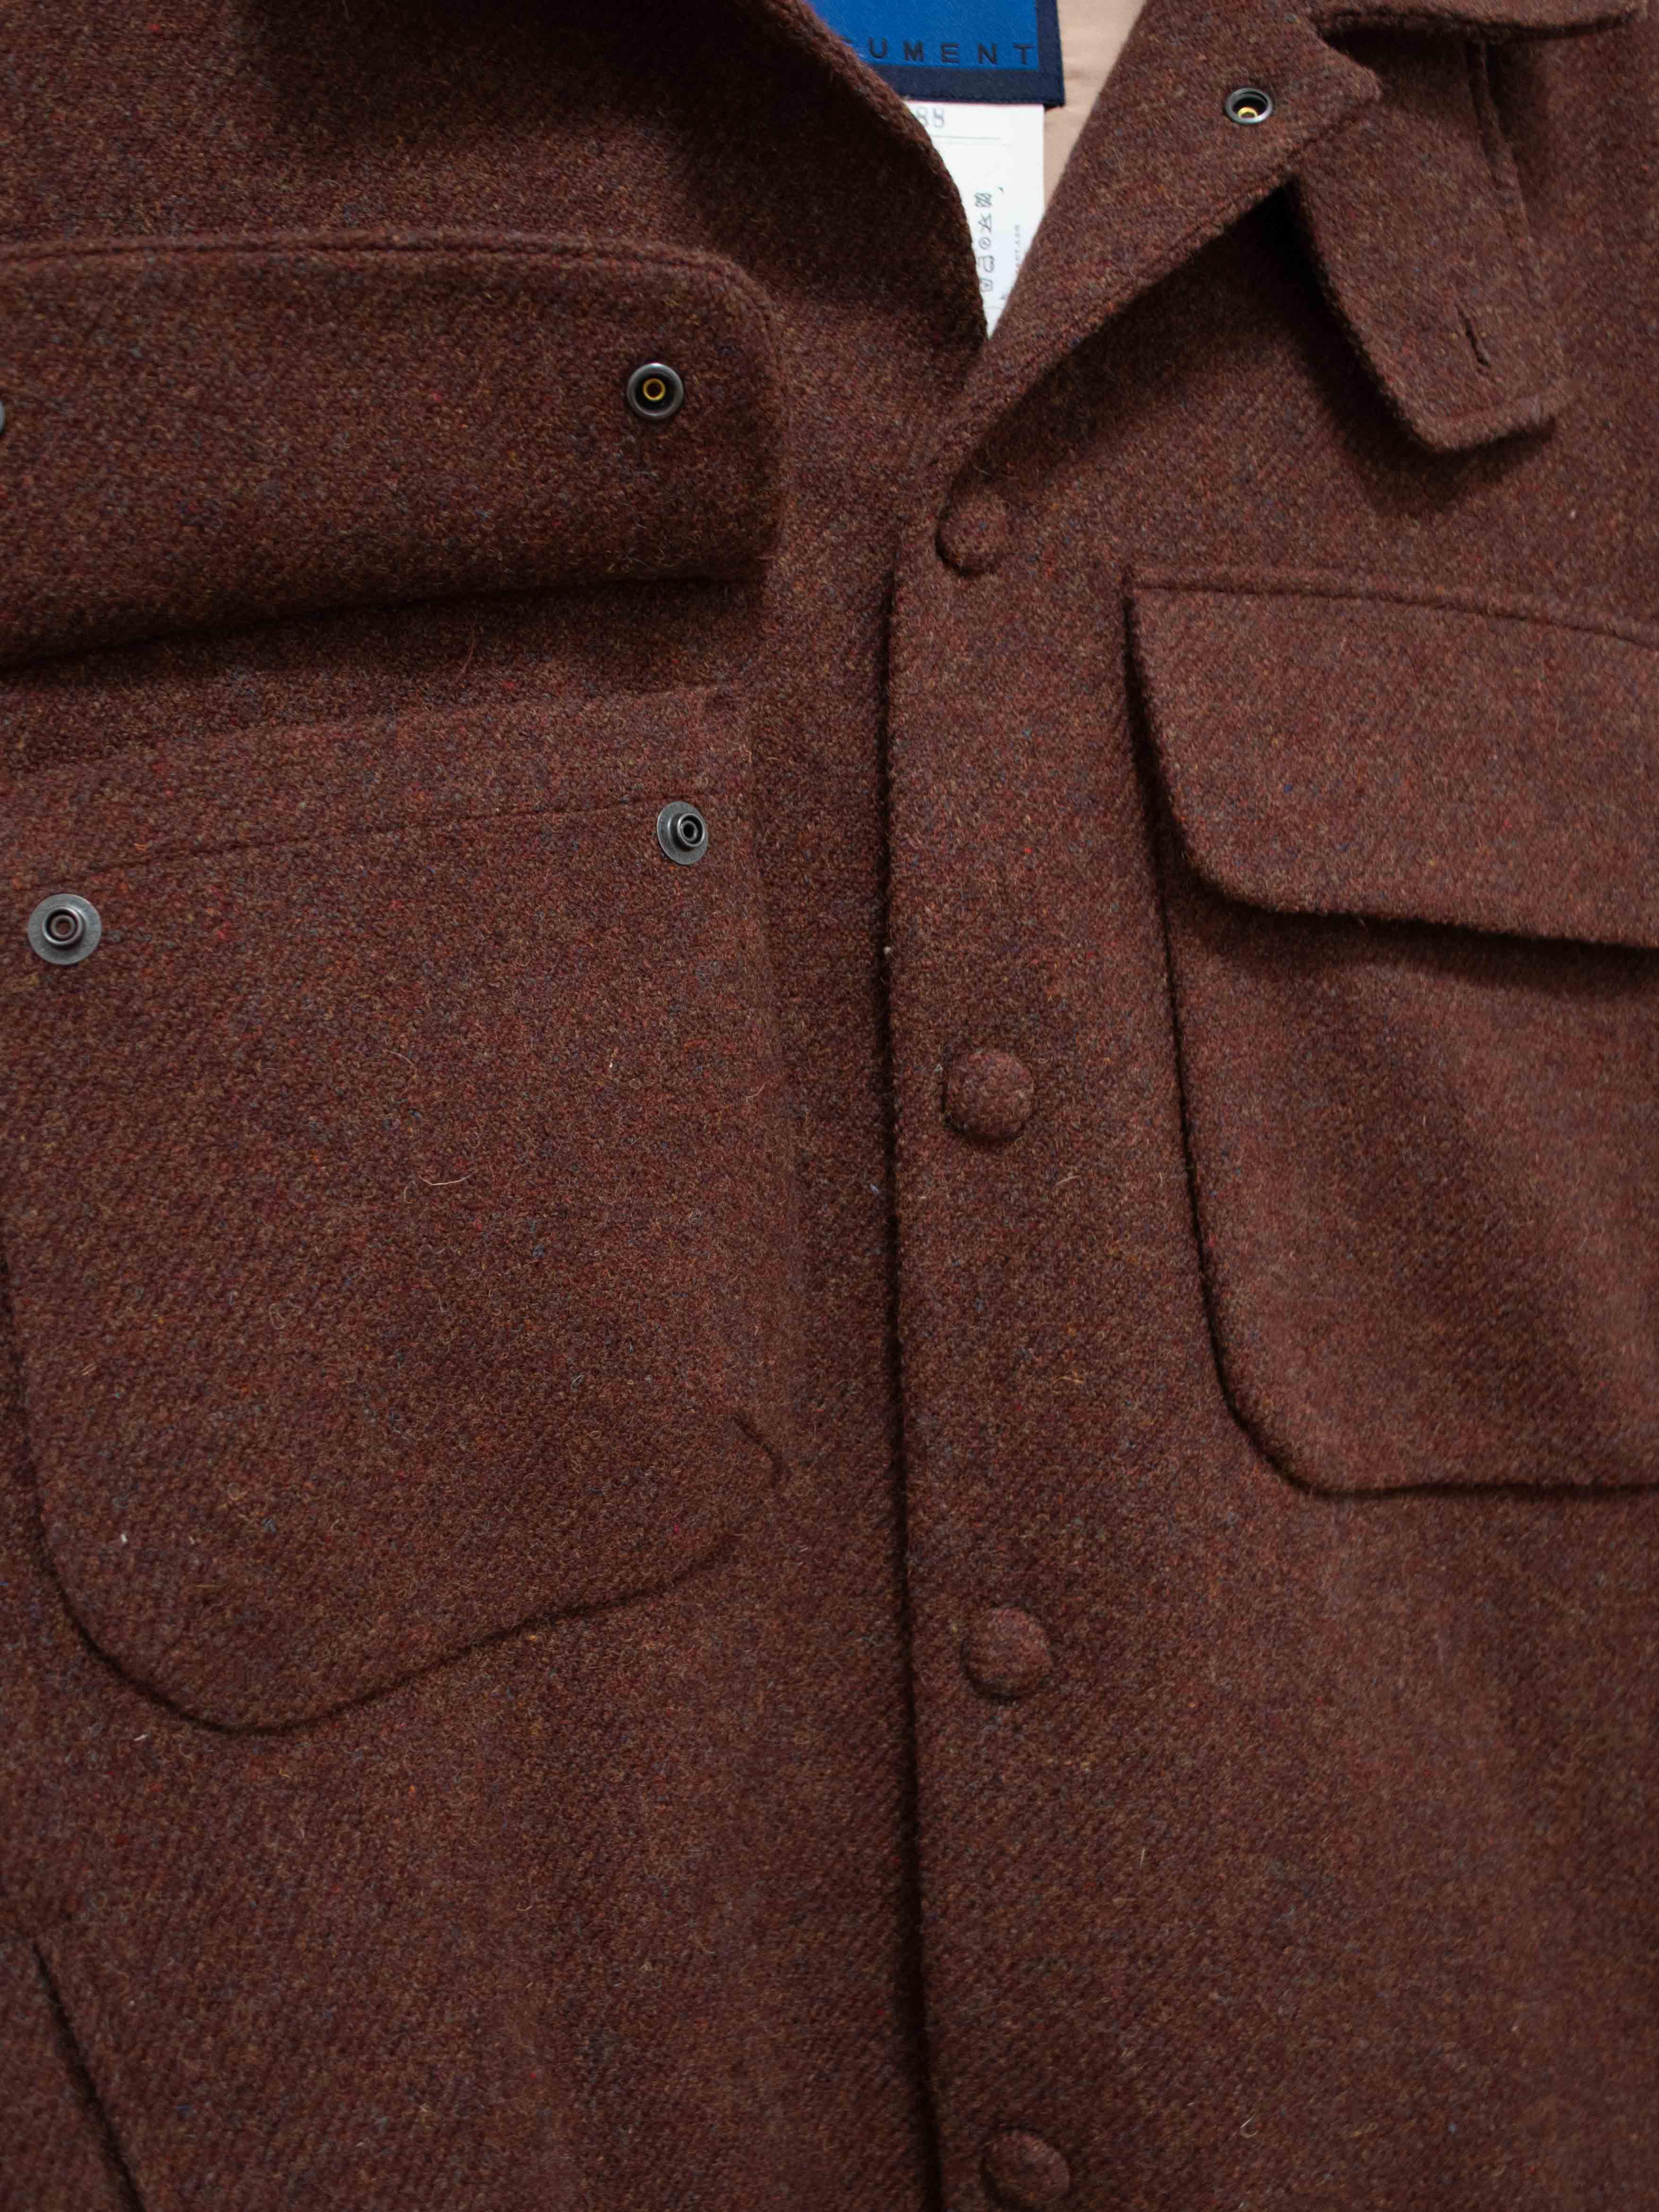 Namu Shop - Document Wool Cotton CPO Jacket - Brown